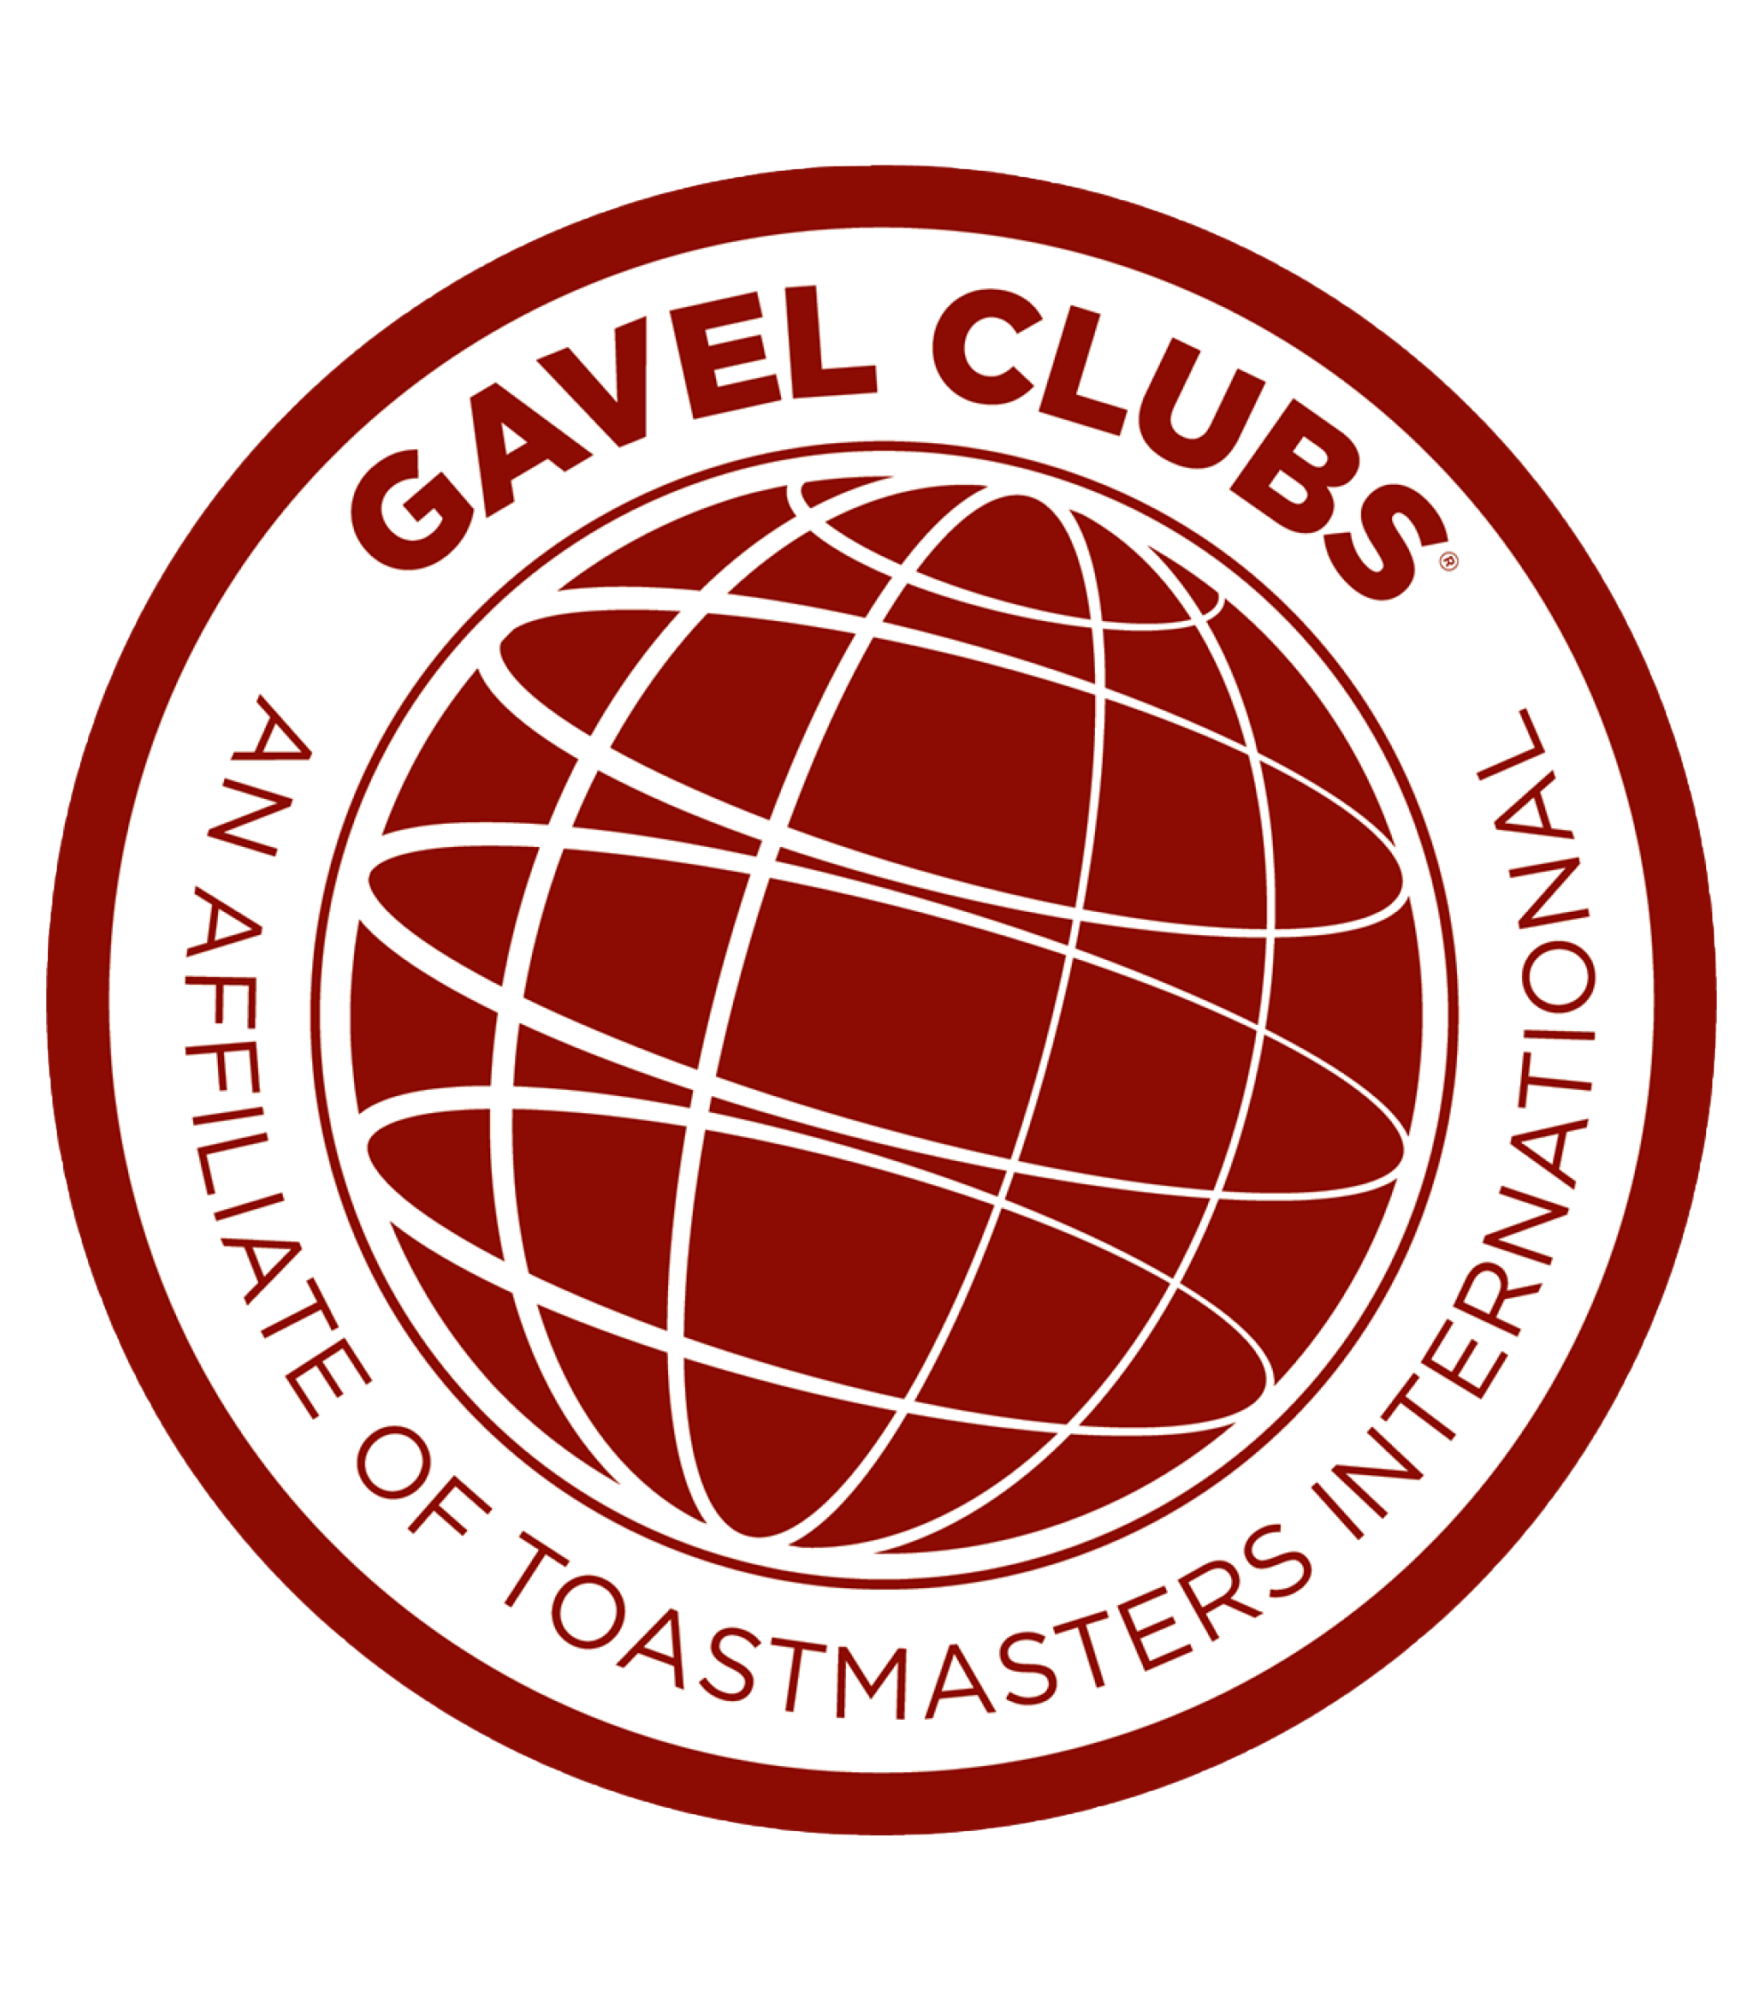 Gavel Club 1 - The Royal College